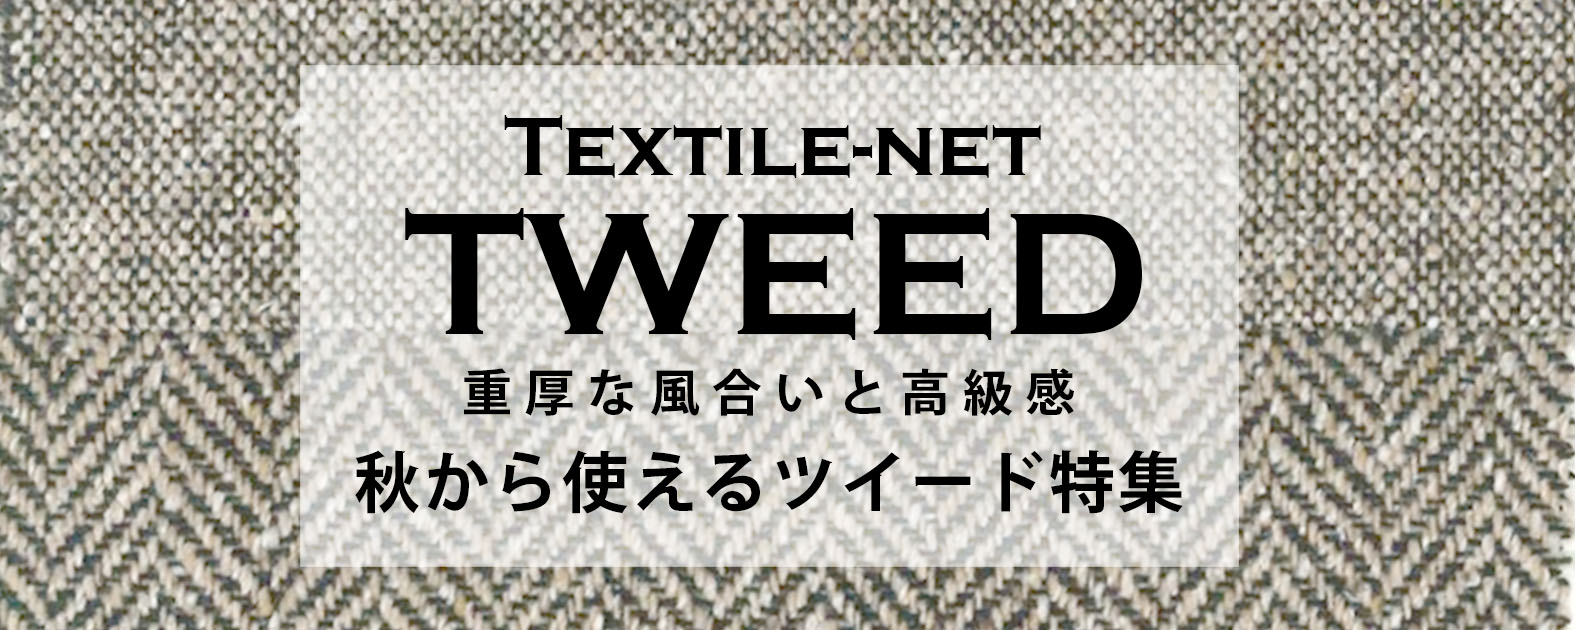 Textilenet-tweed-autumn-winter2020